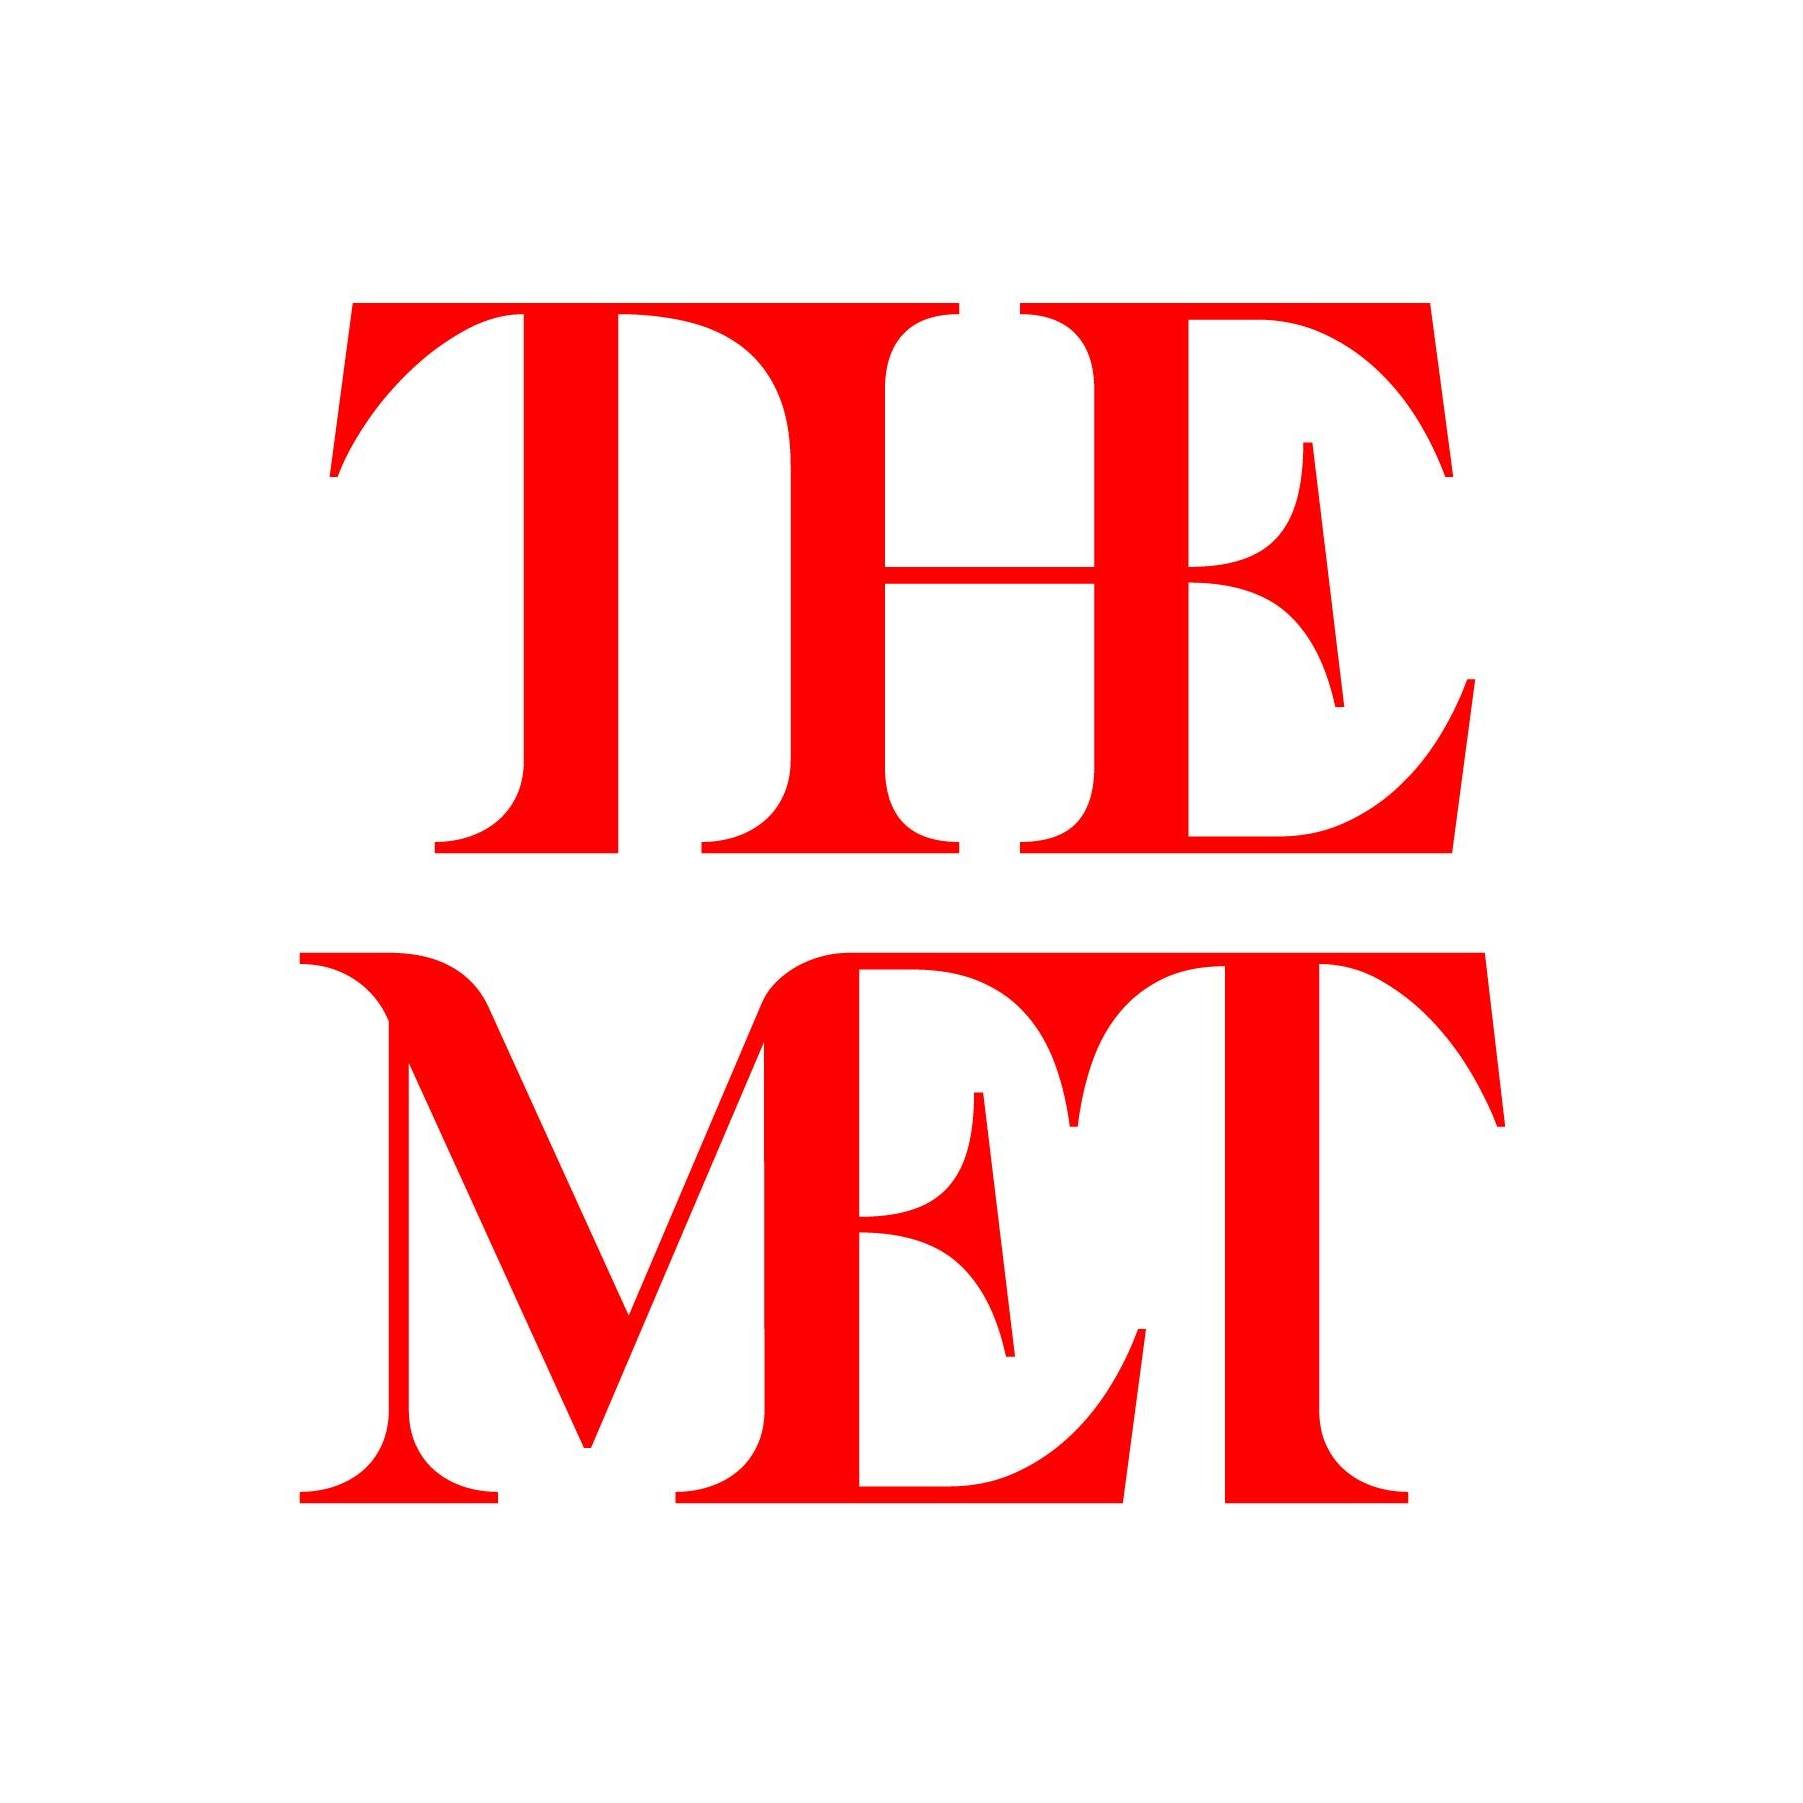 Business logo of The Metropolitan Museum of Art